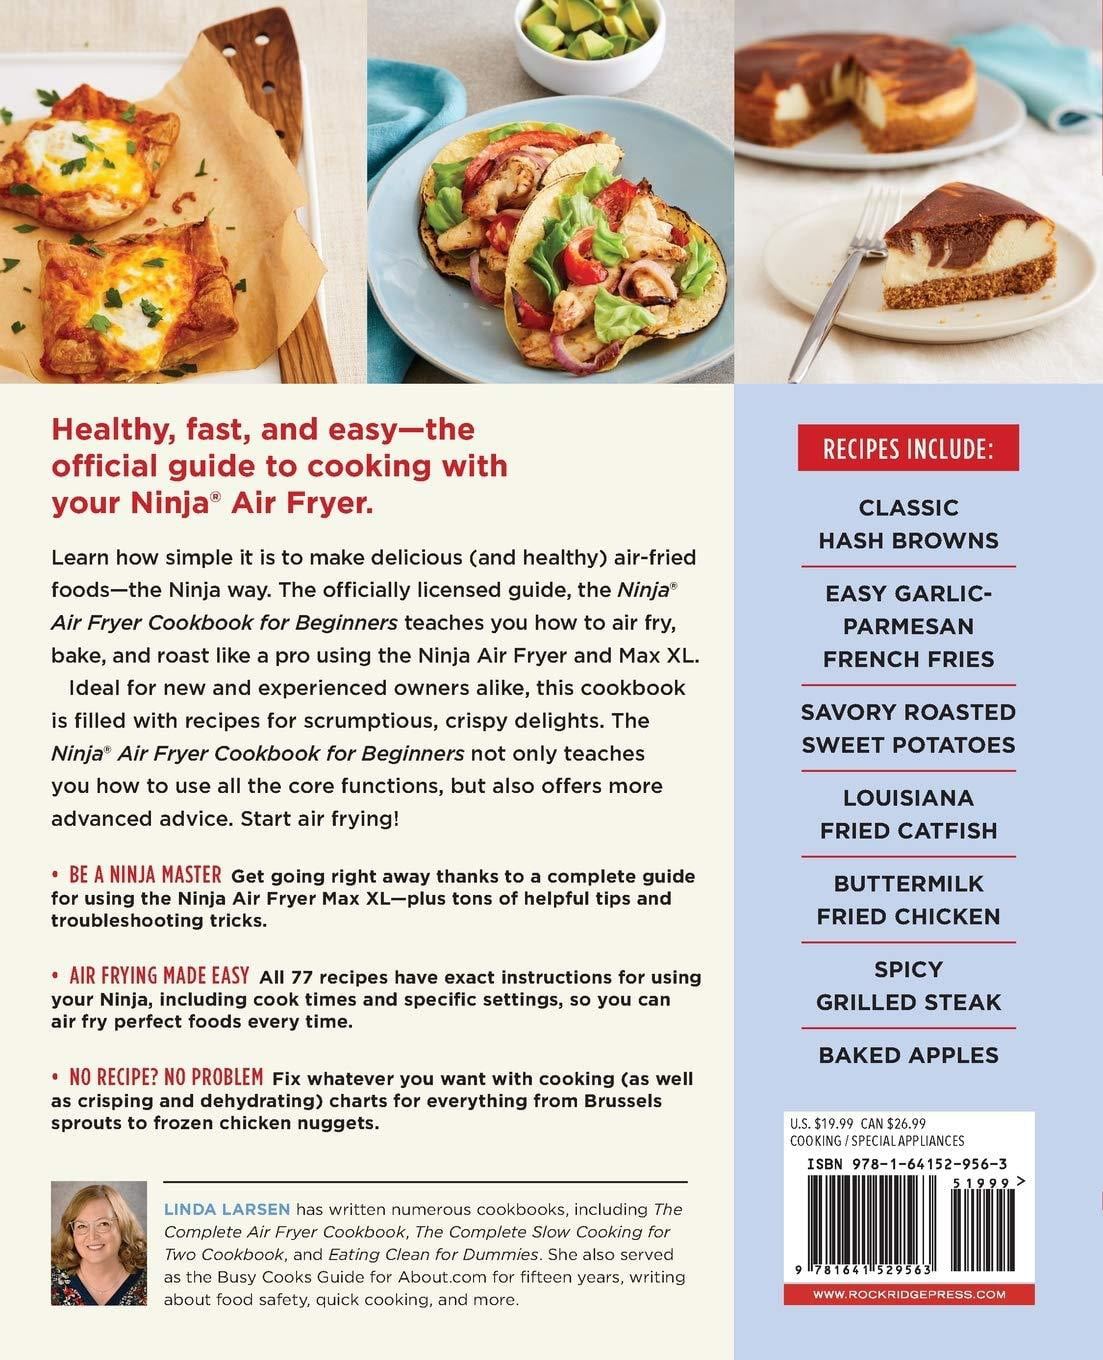 Ultrean Air Fryer Cookbook for Beginners (Paperback)